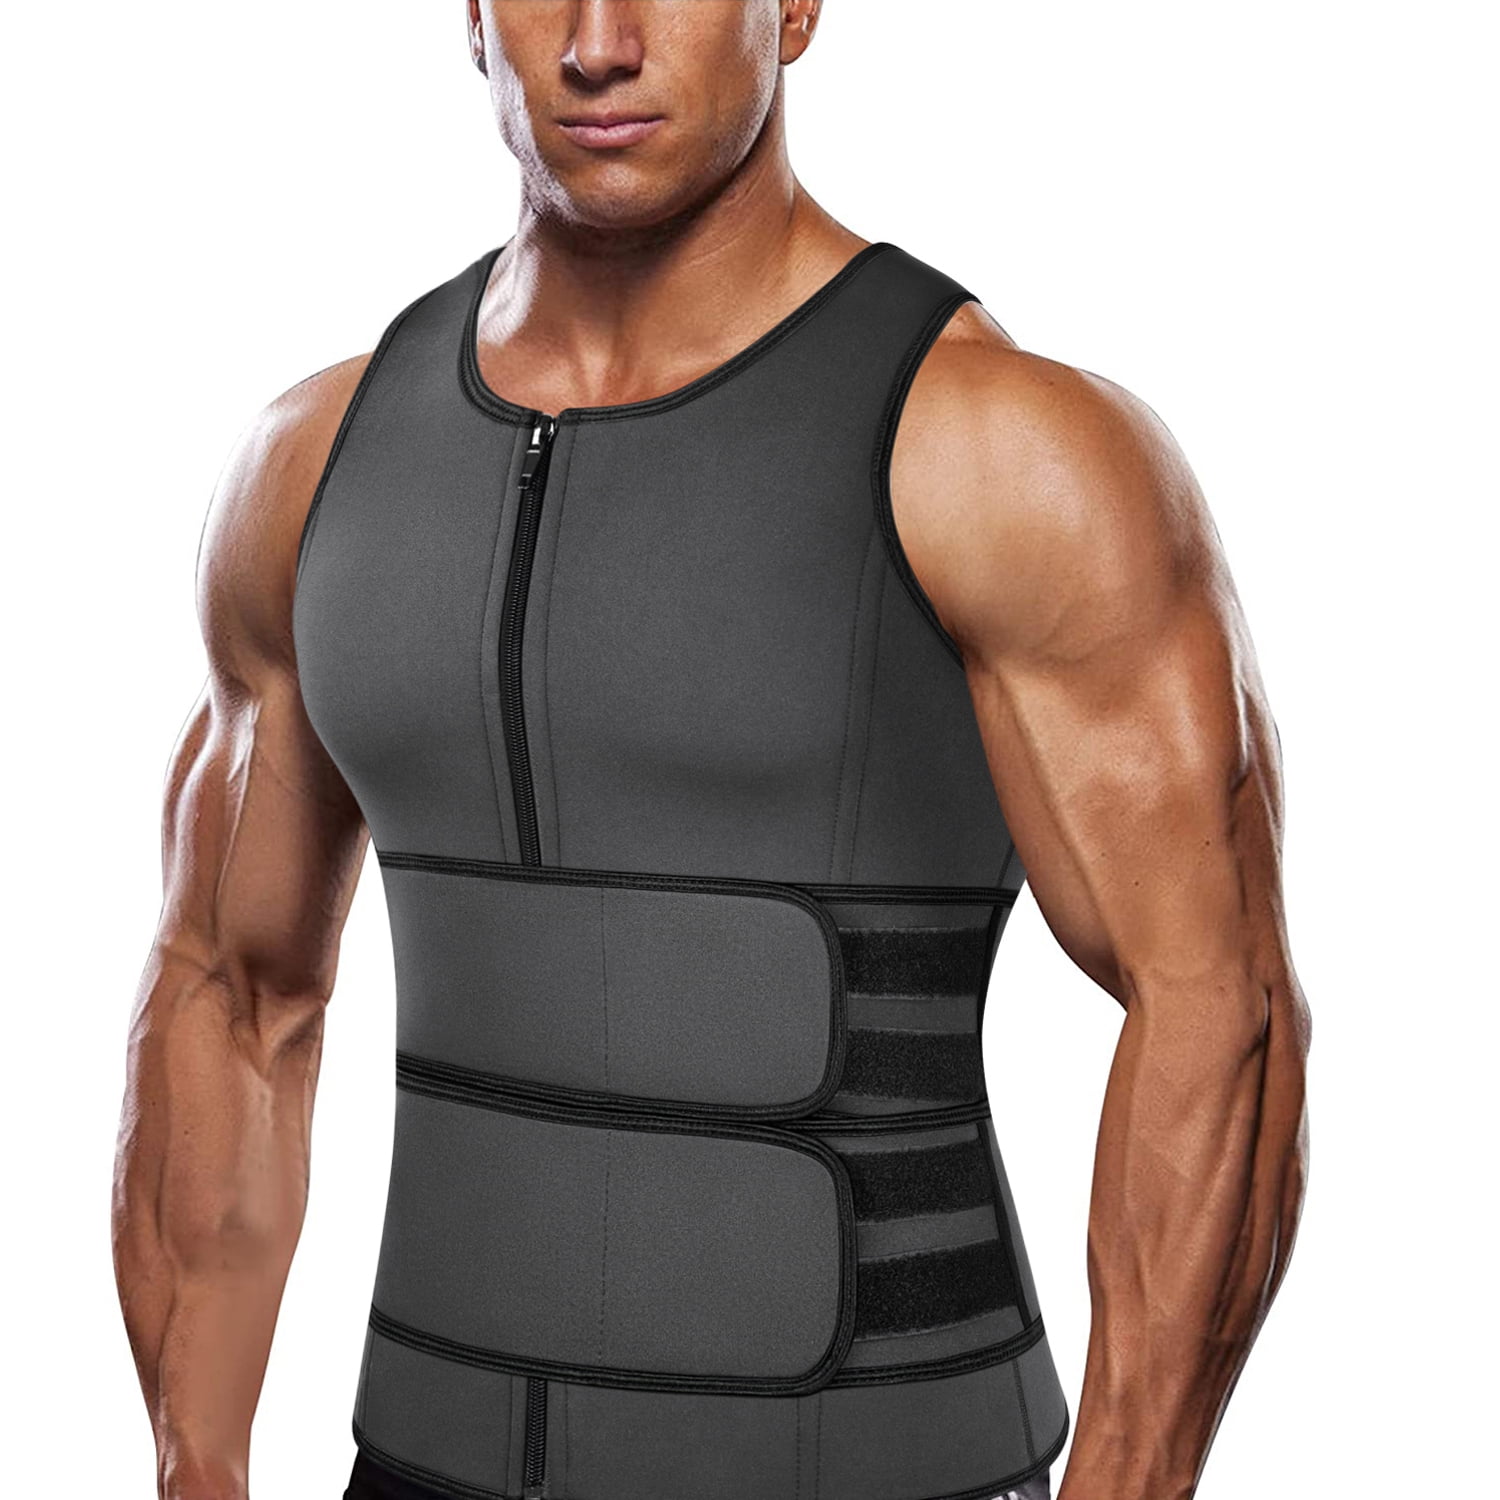 HOTER Men Sauna-Sweat-Vest Slimming-Shapewear Comression-Fitness Body Shaper Workout Tank Top Polymer Trainer